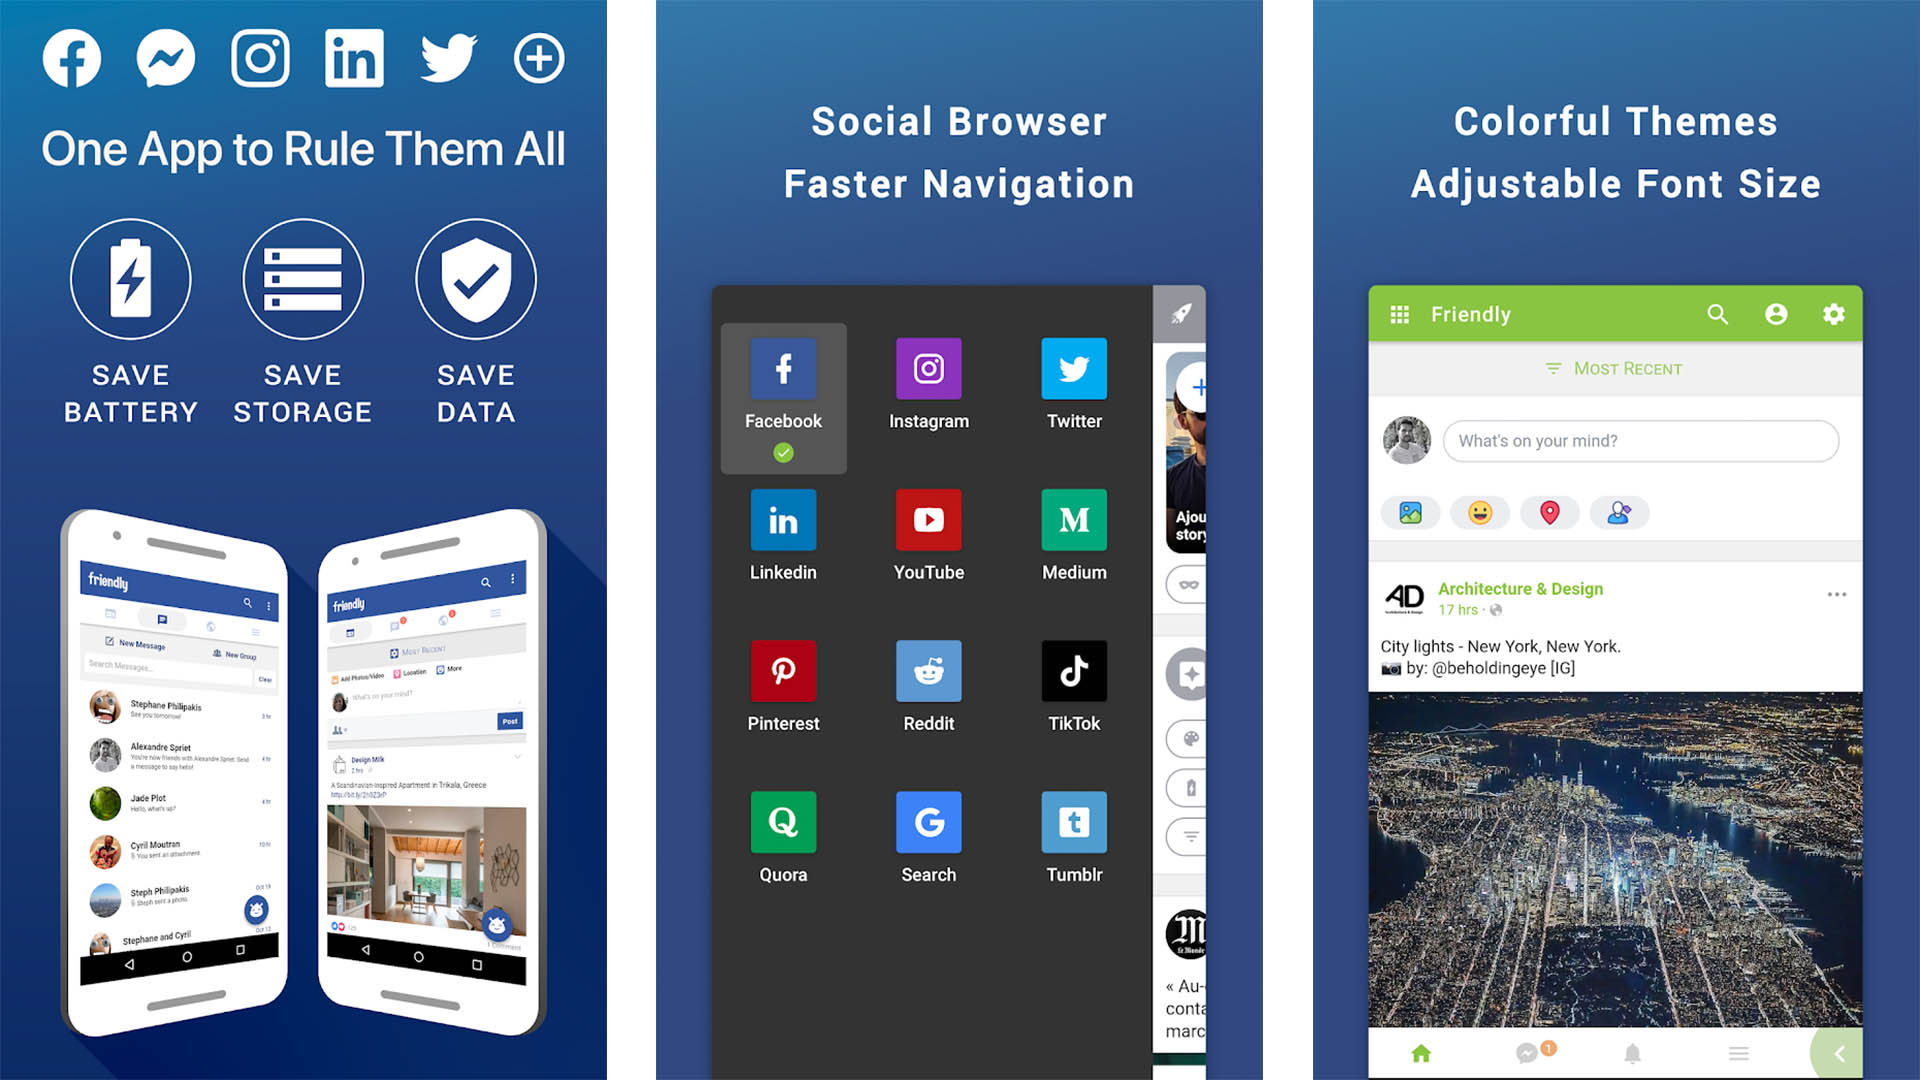 Friendly Social Browser screenshot 2020